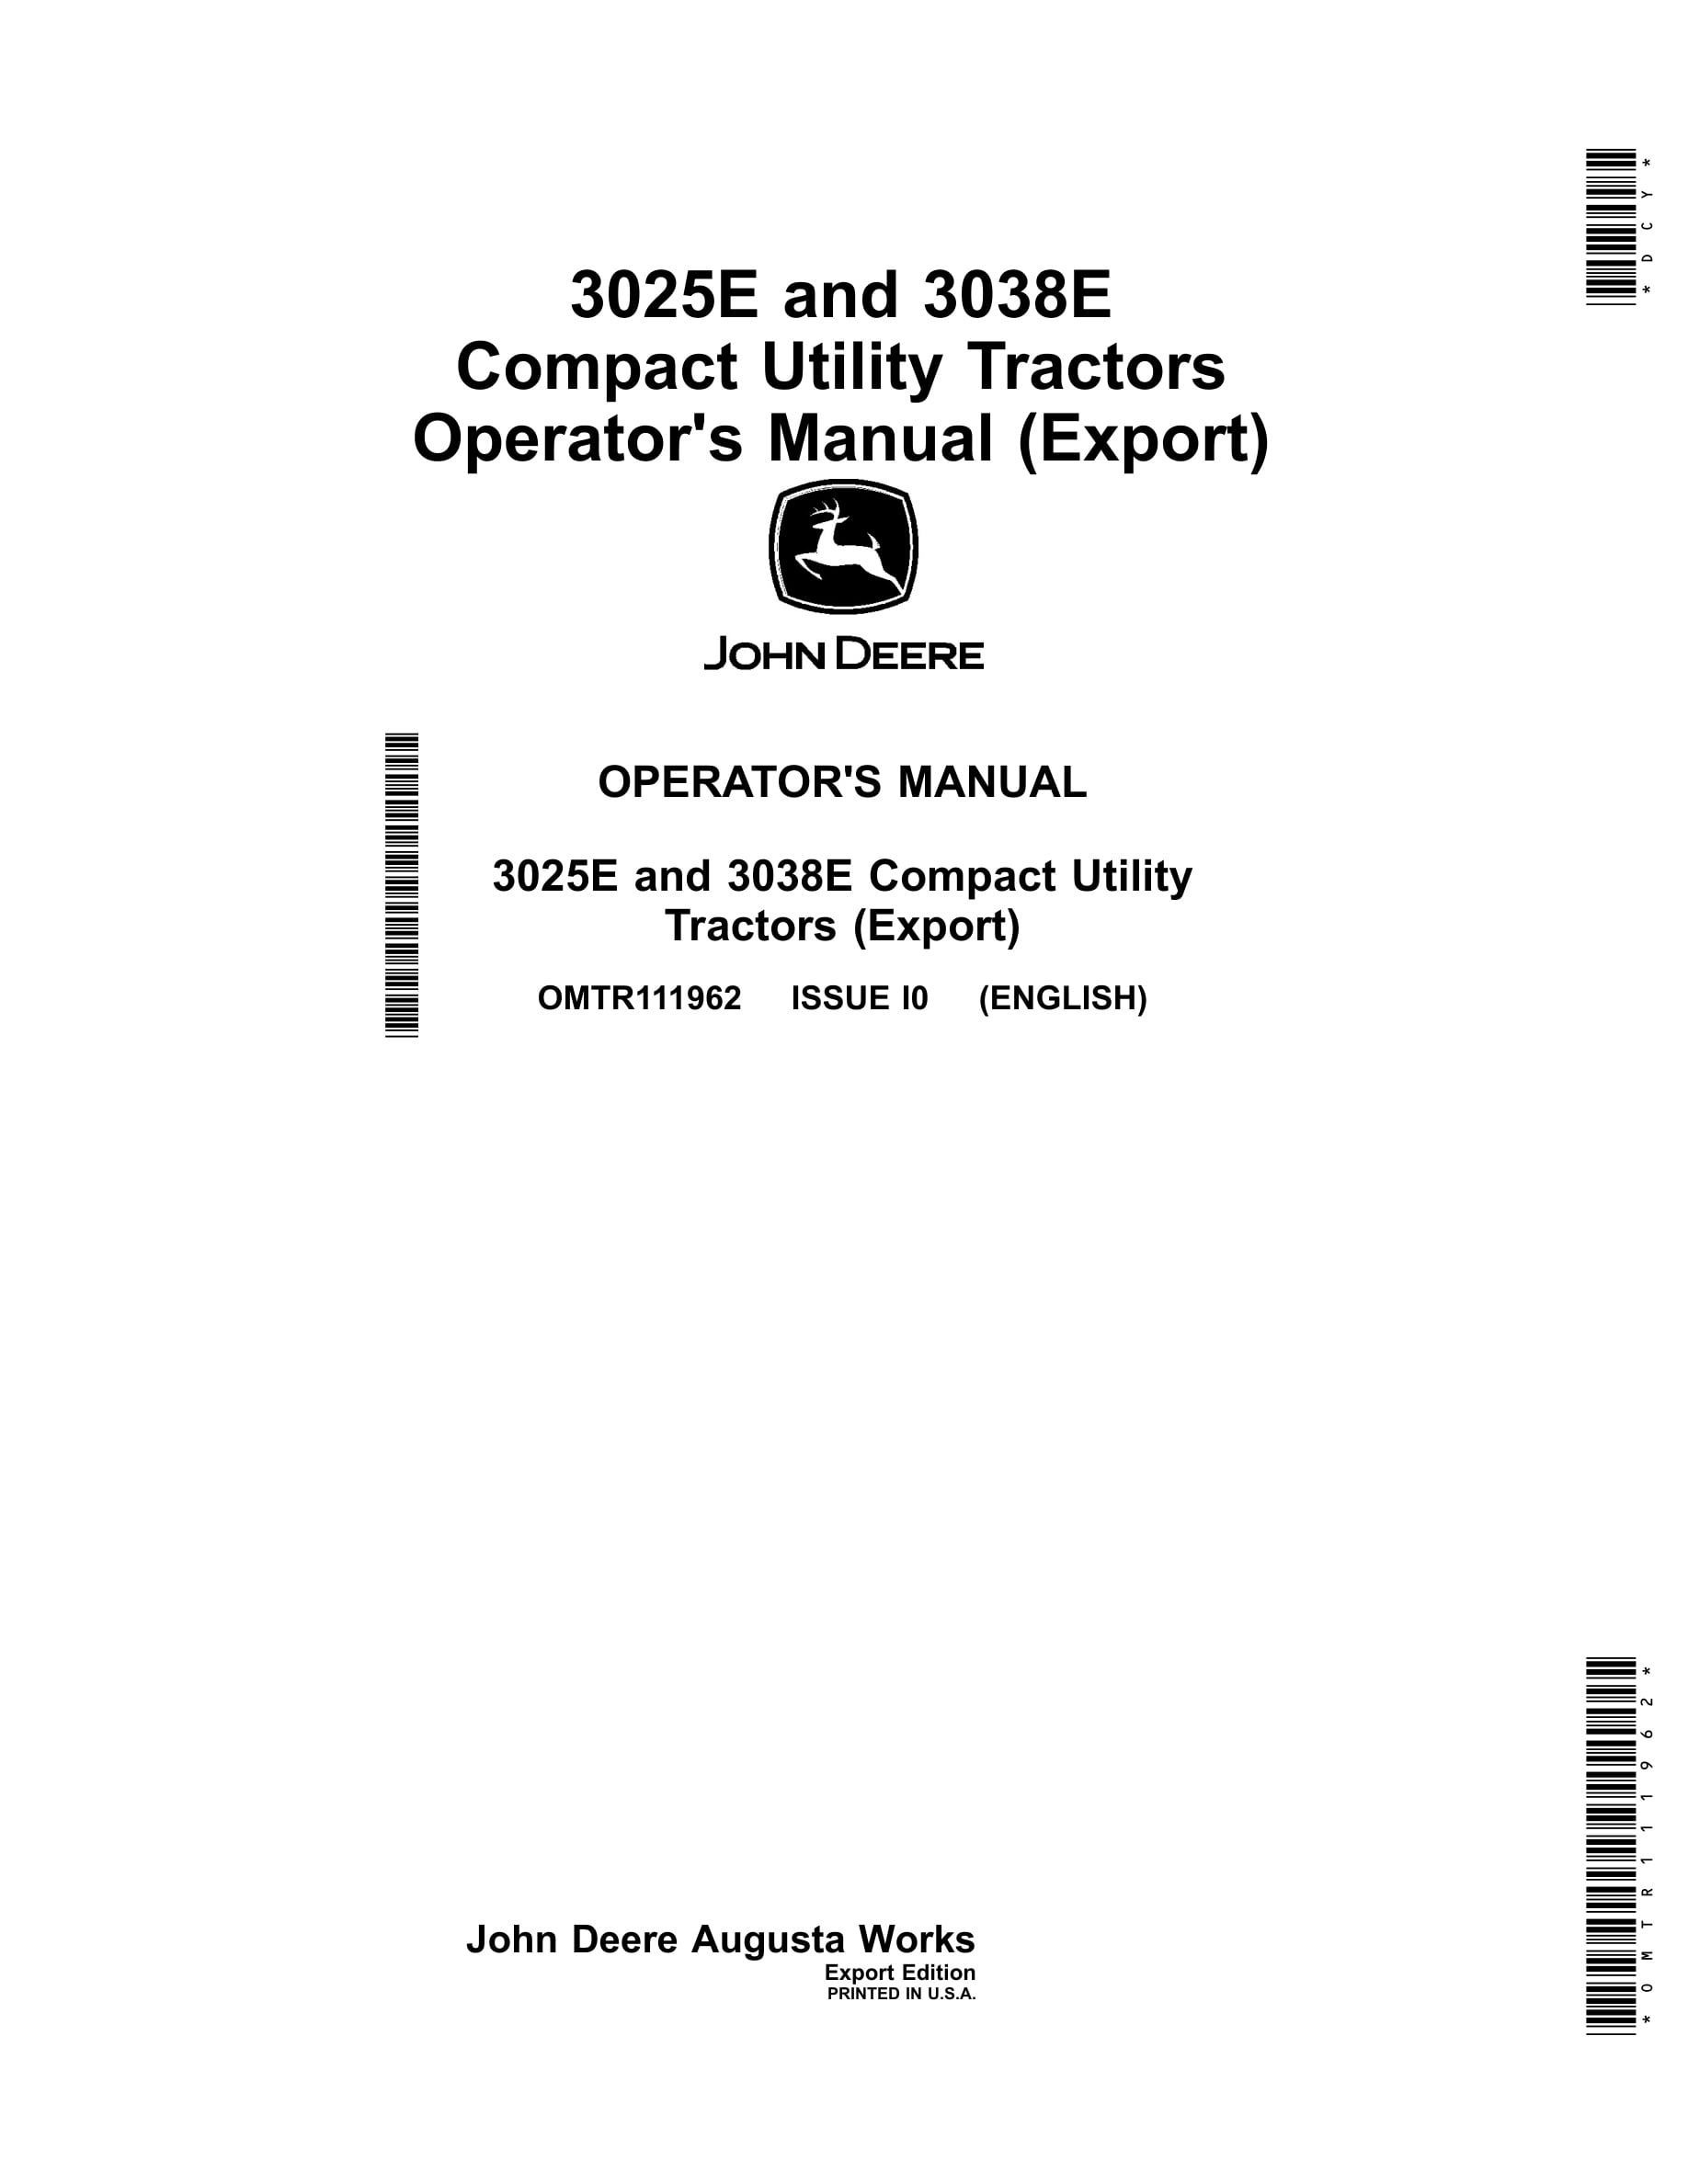 John Deere 3025e And 3038e Compact Utility Tractors Operator Manuals OMTR111962-1